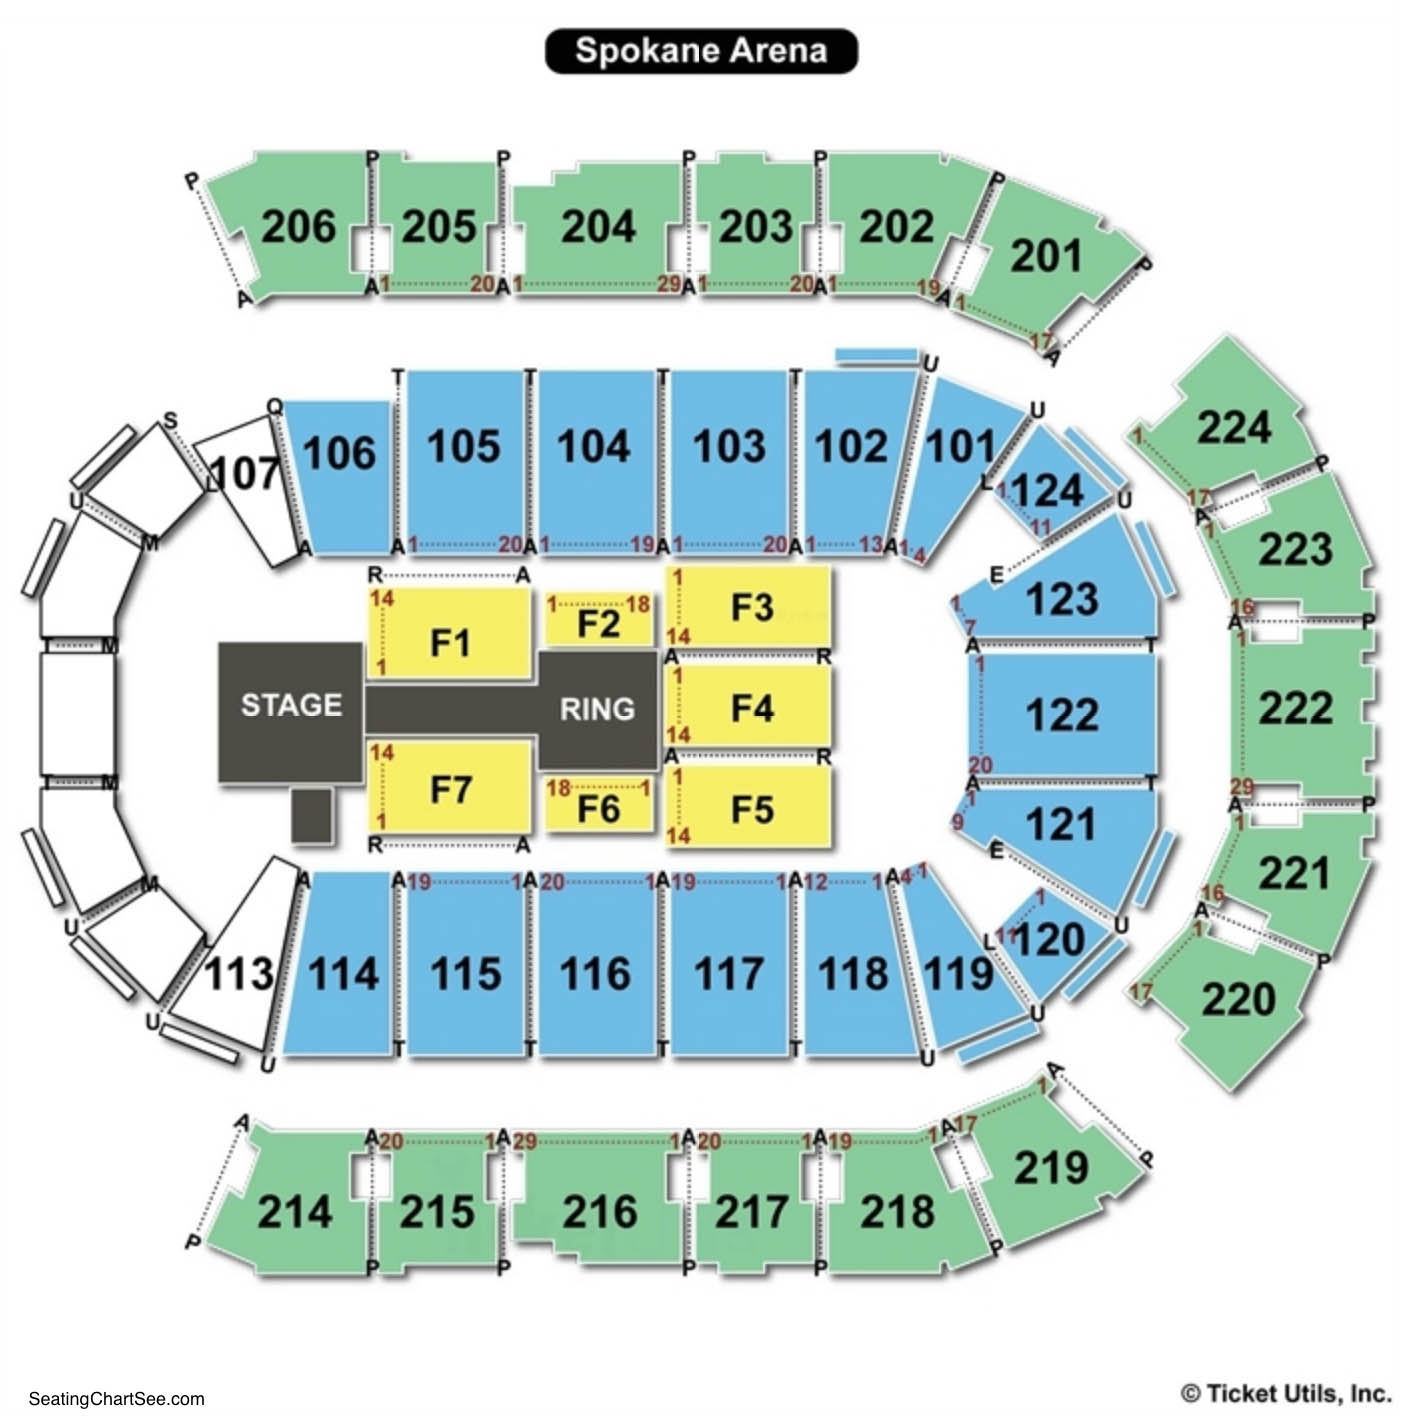 Spokane Arena Seating Capacity Review Home Decor